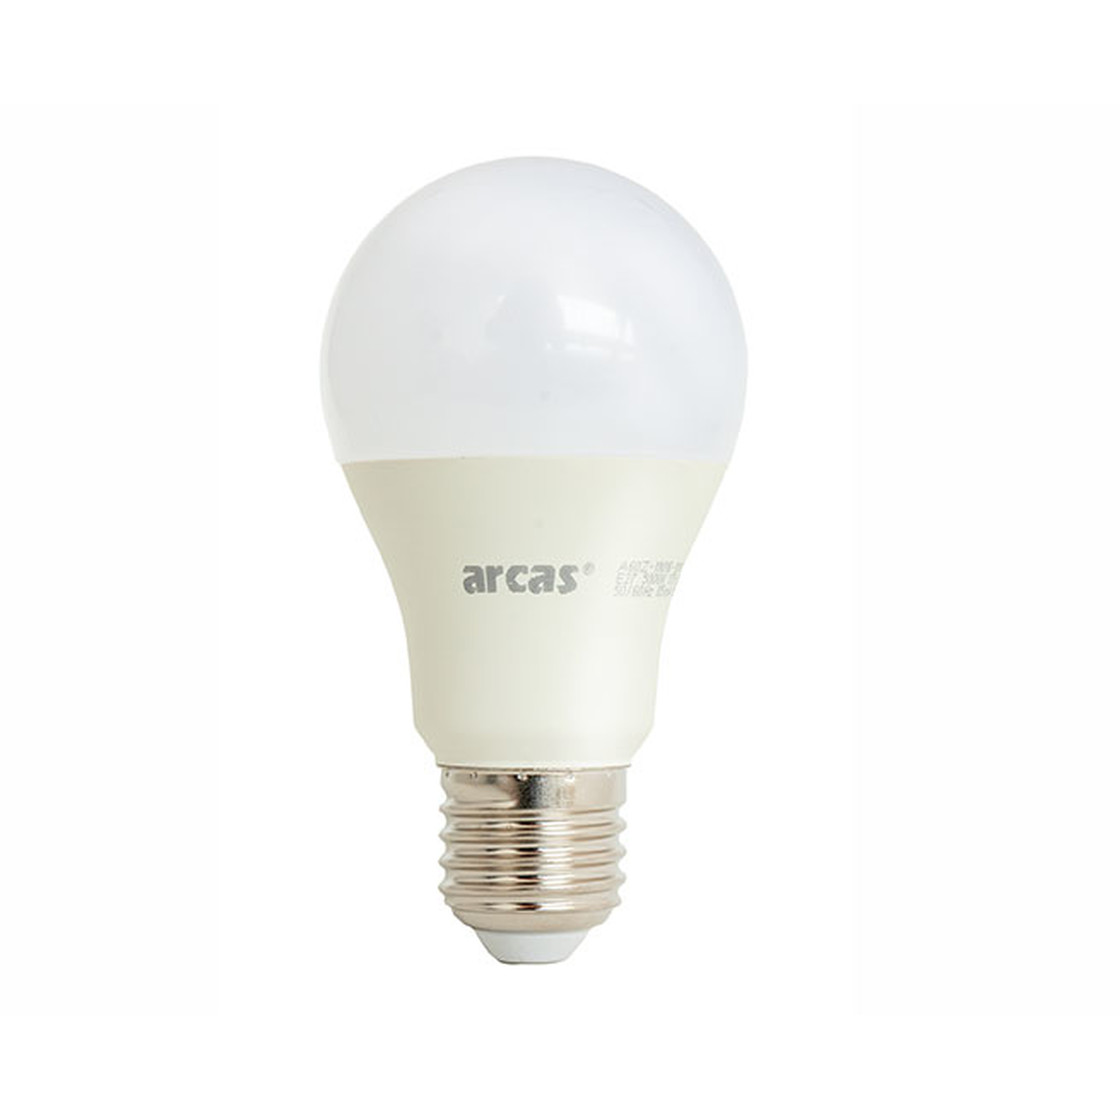 Arcas E27 LED Lampe Birne 10W 5000K 806 Lumen Tageslicht